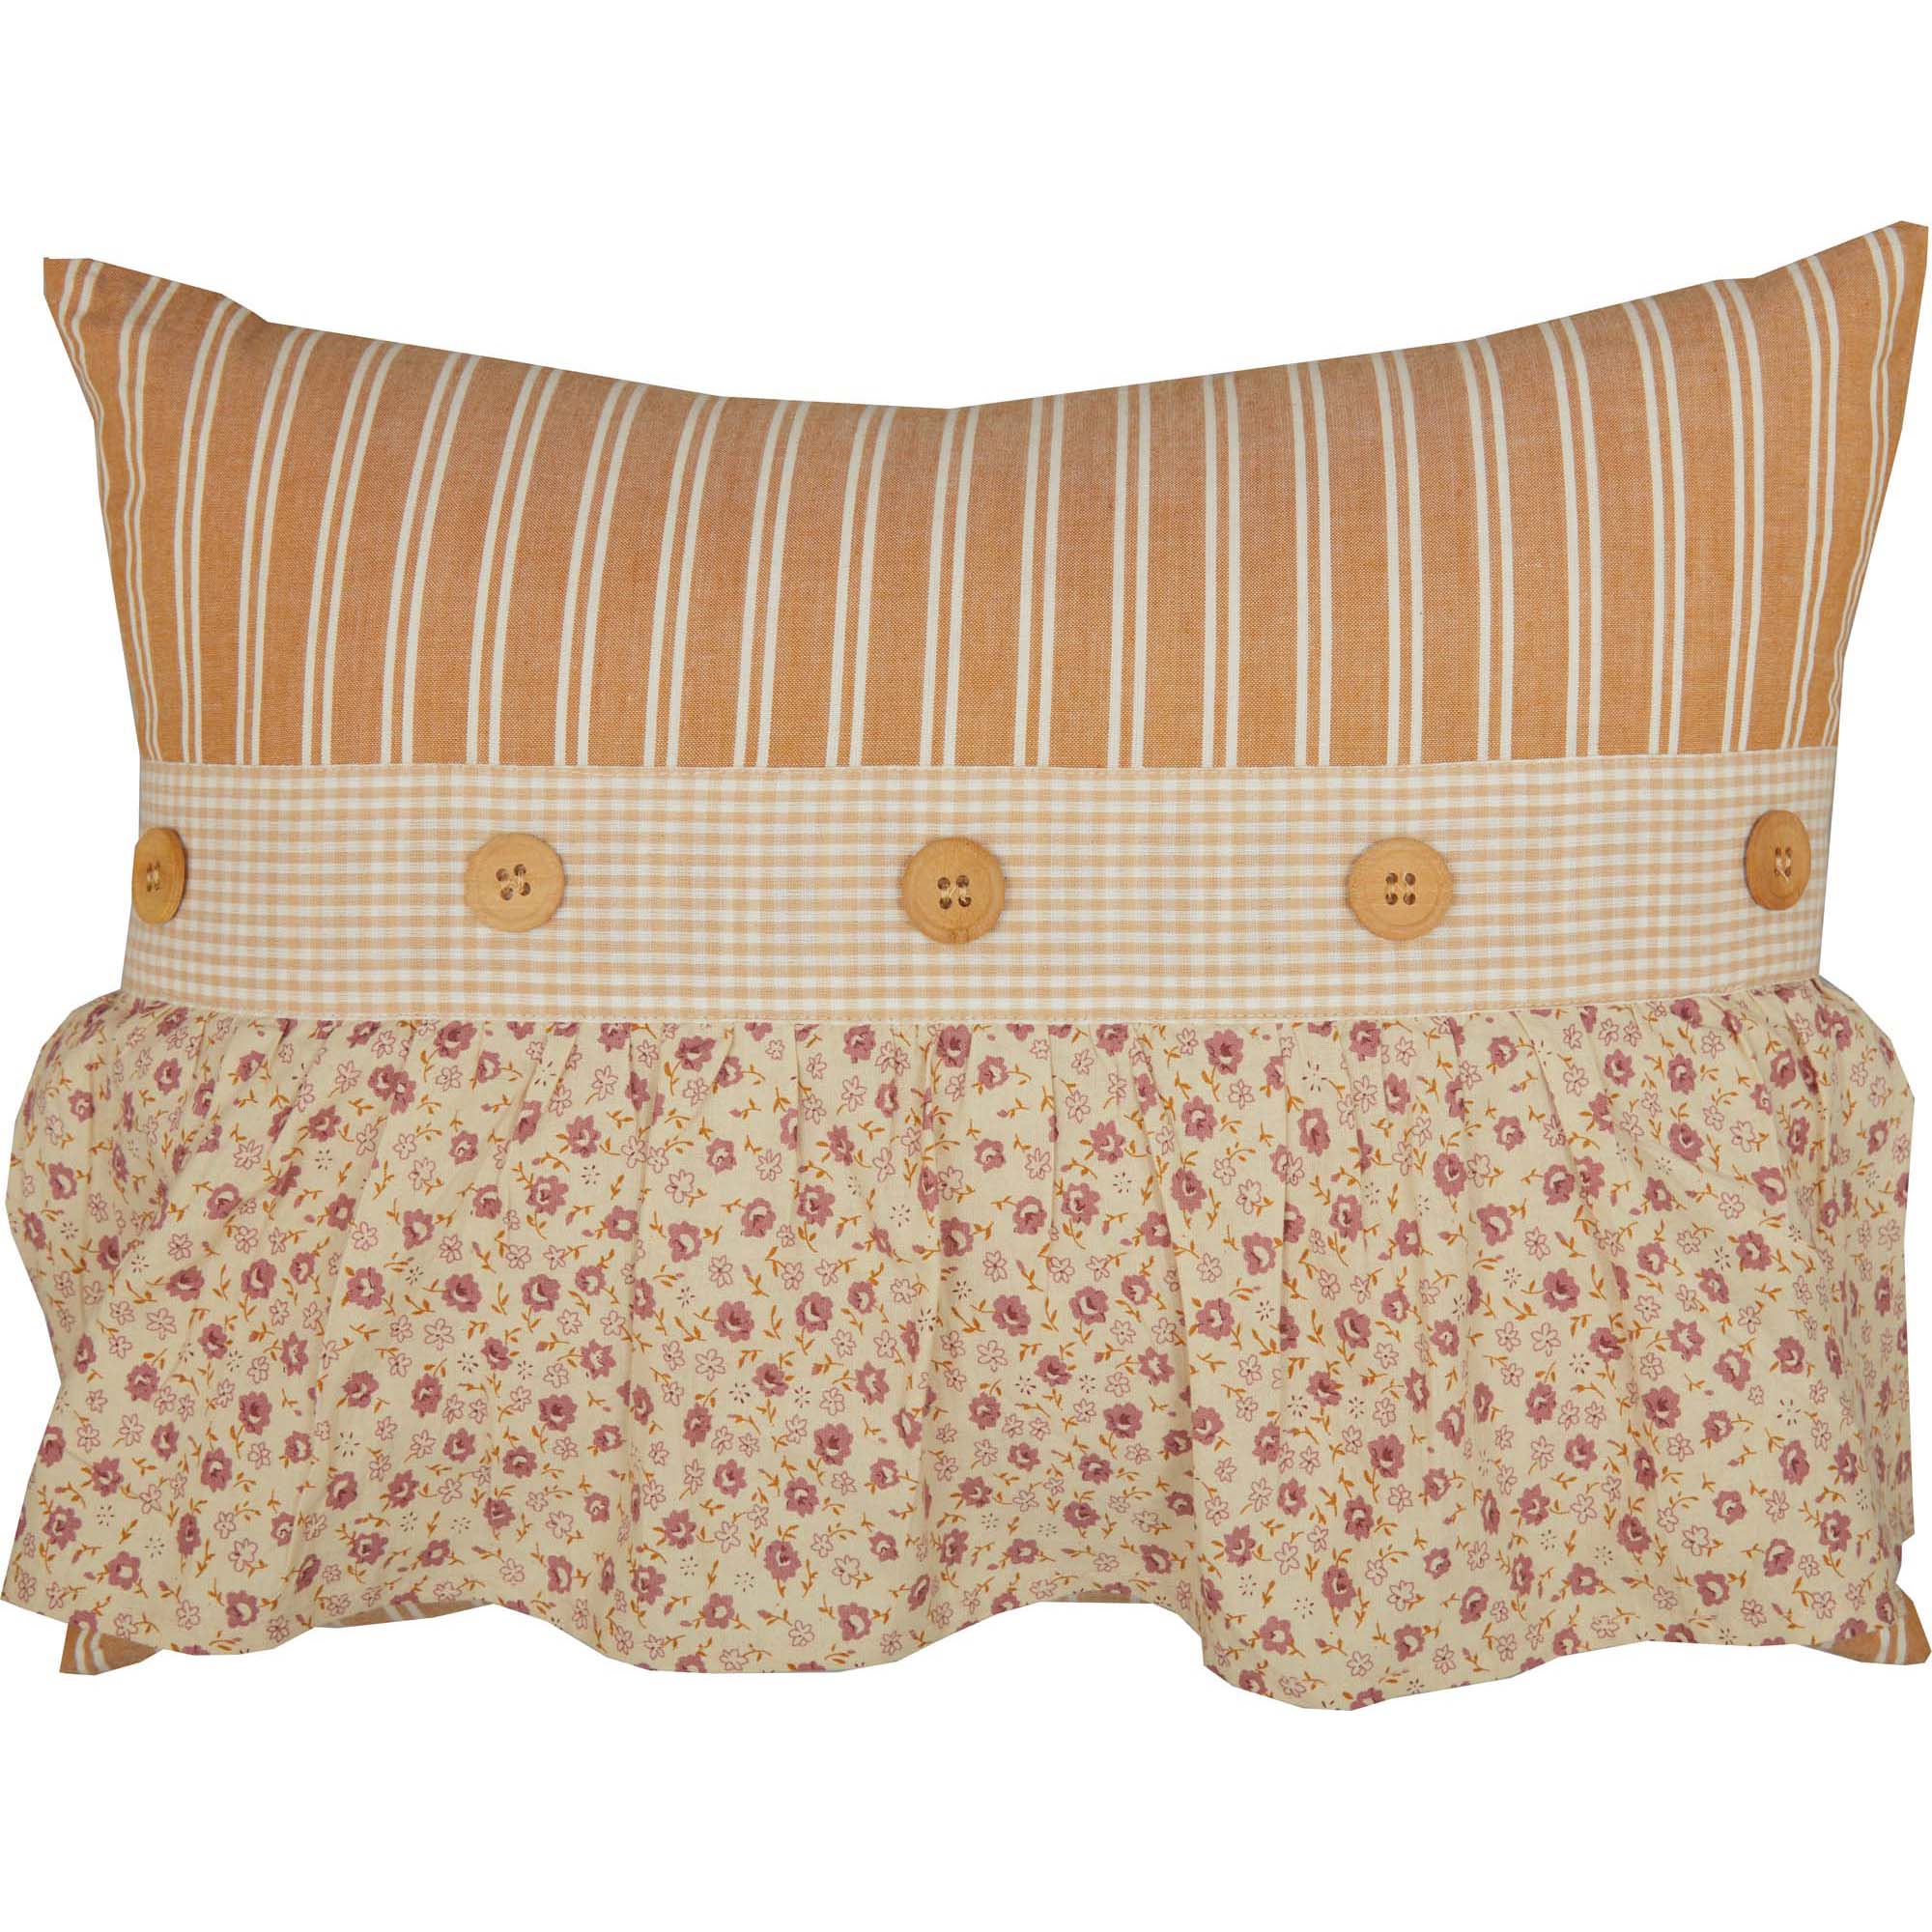 Camilia Ruffled Pillow 14x18 VHC Brands